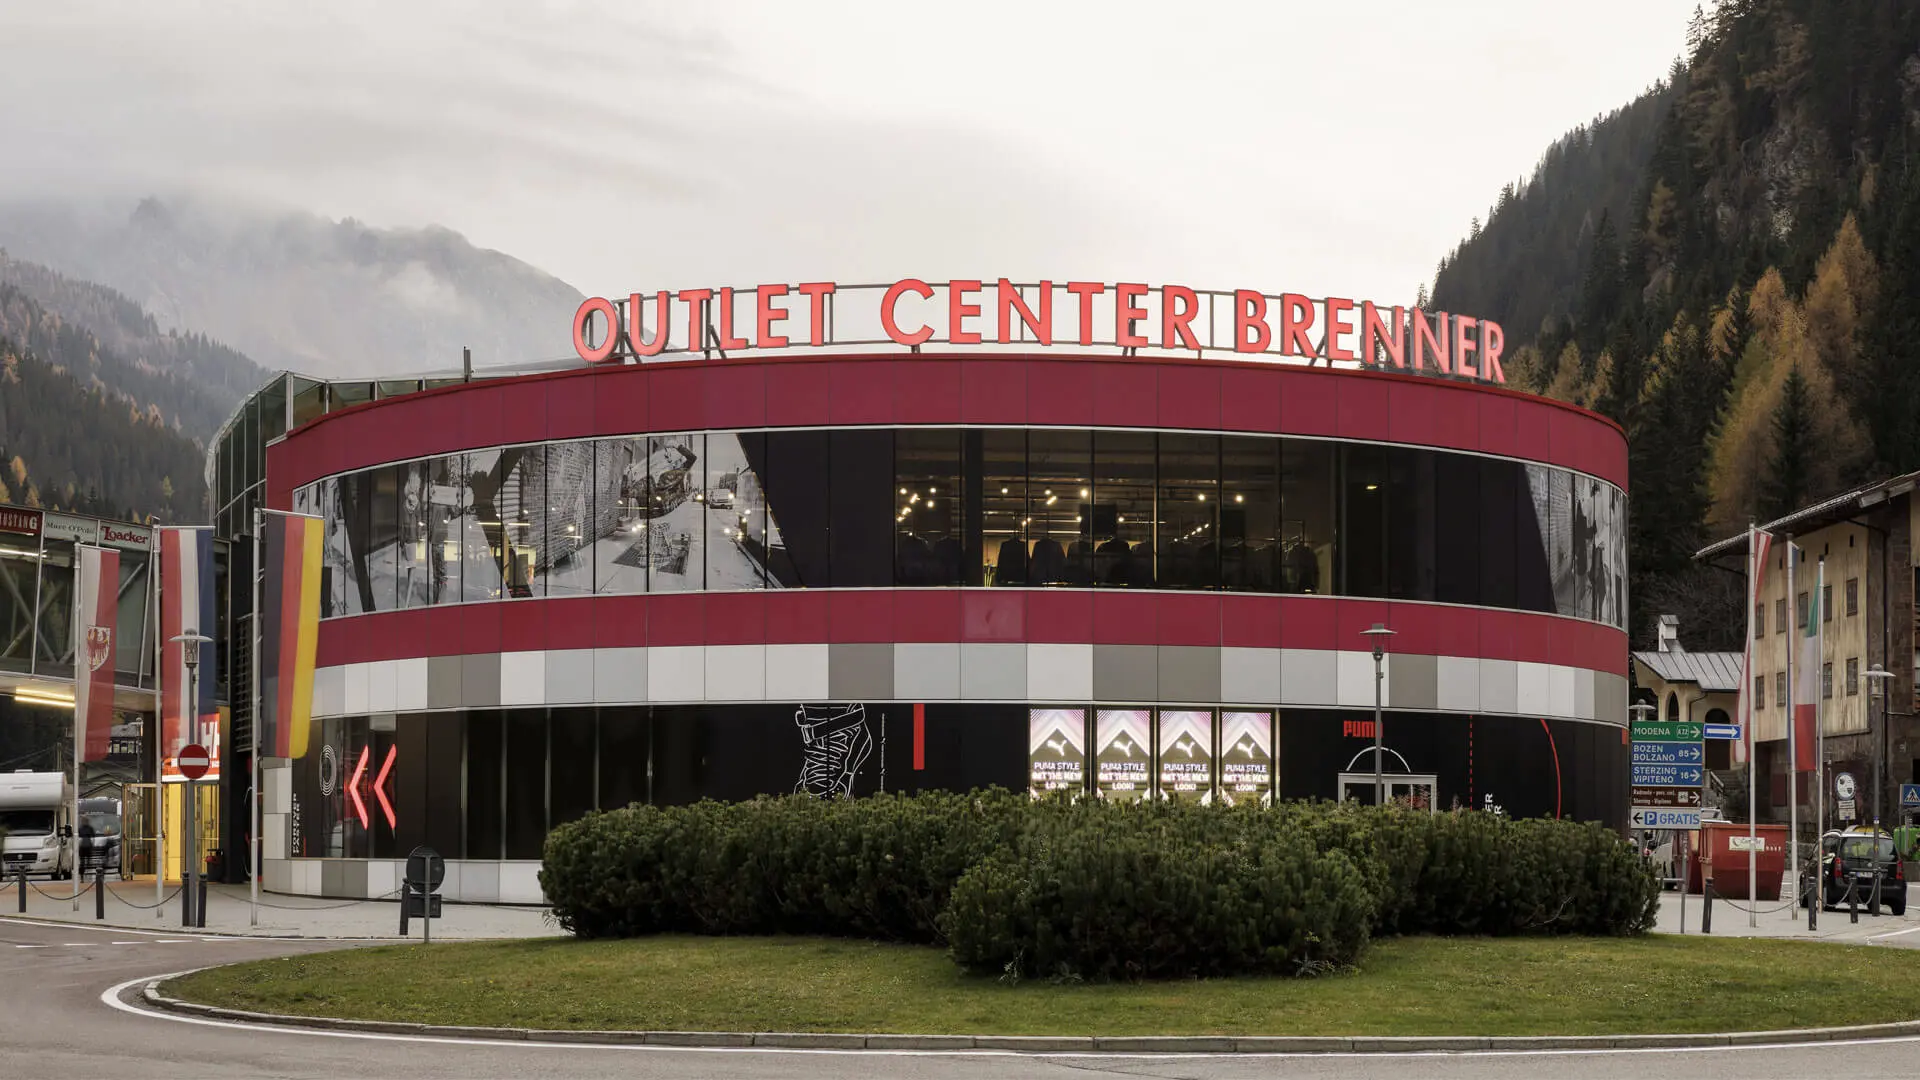 Outlet Center Brenner